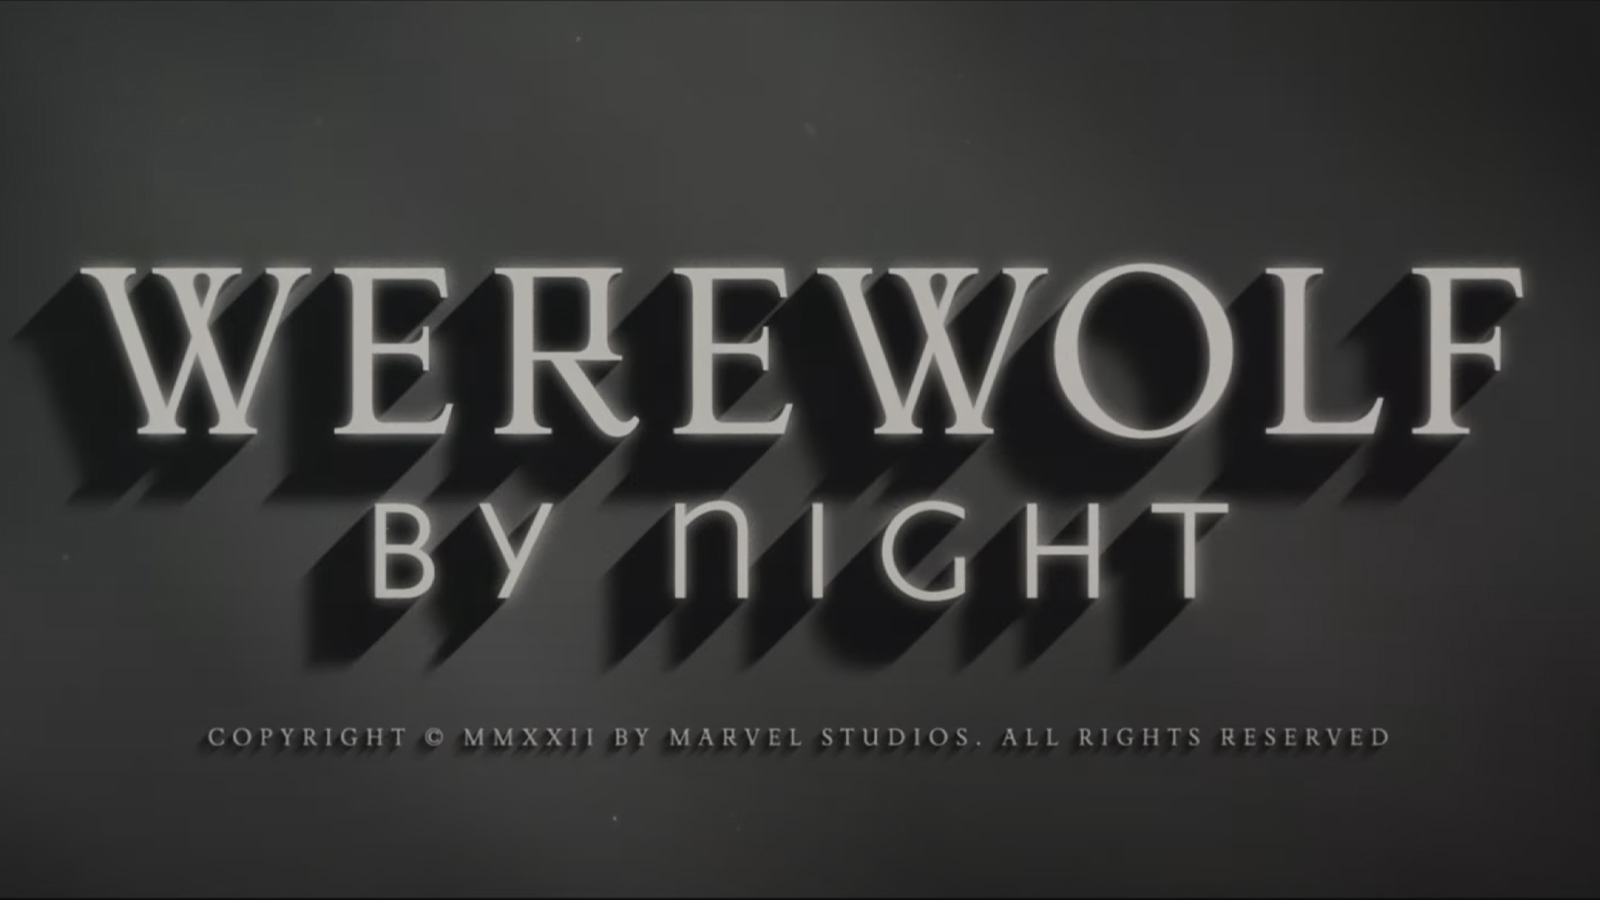 Marvel Studios' Werewolf by Night trailer revealed